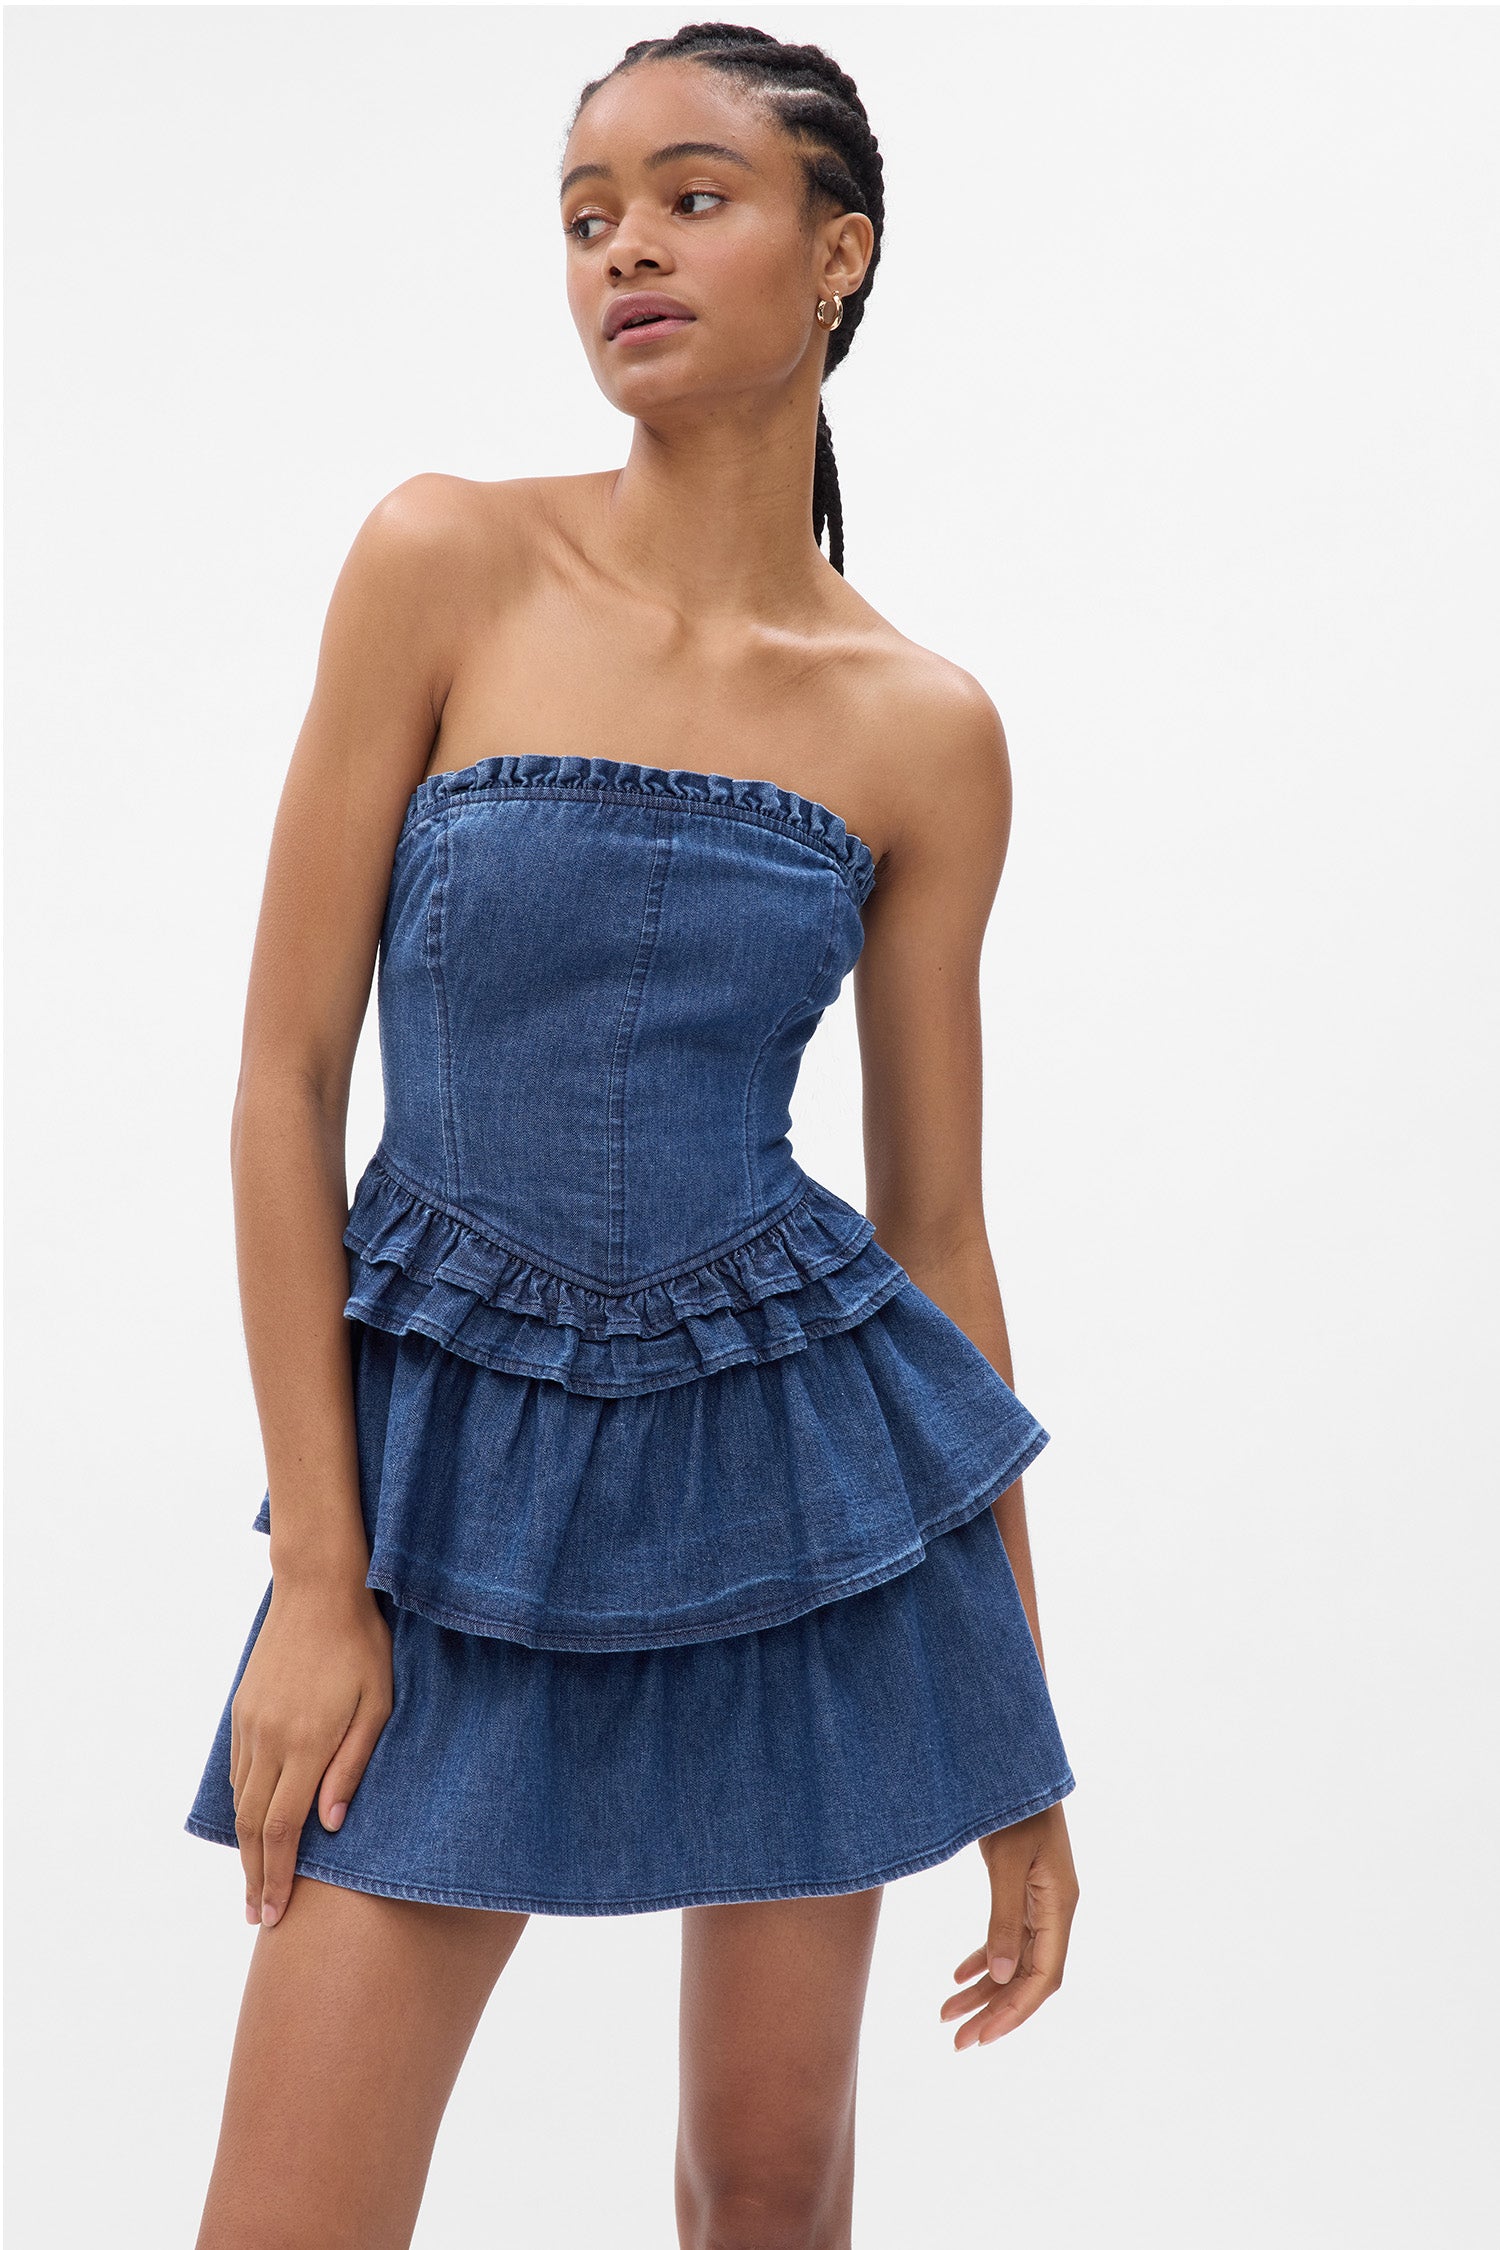 Model wearing blue denim mini dress with corset top and ruffle skirt